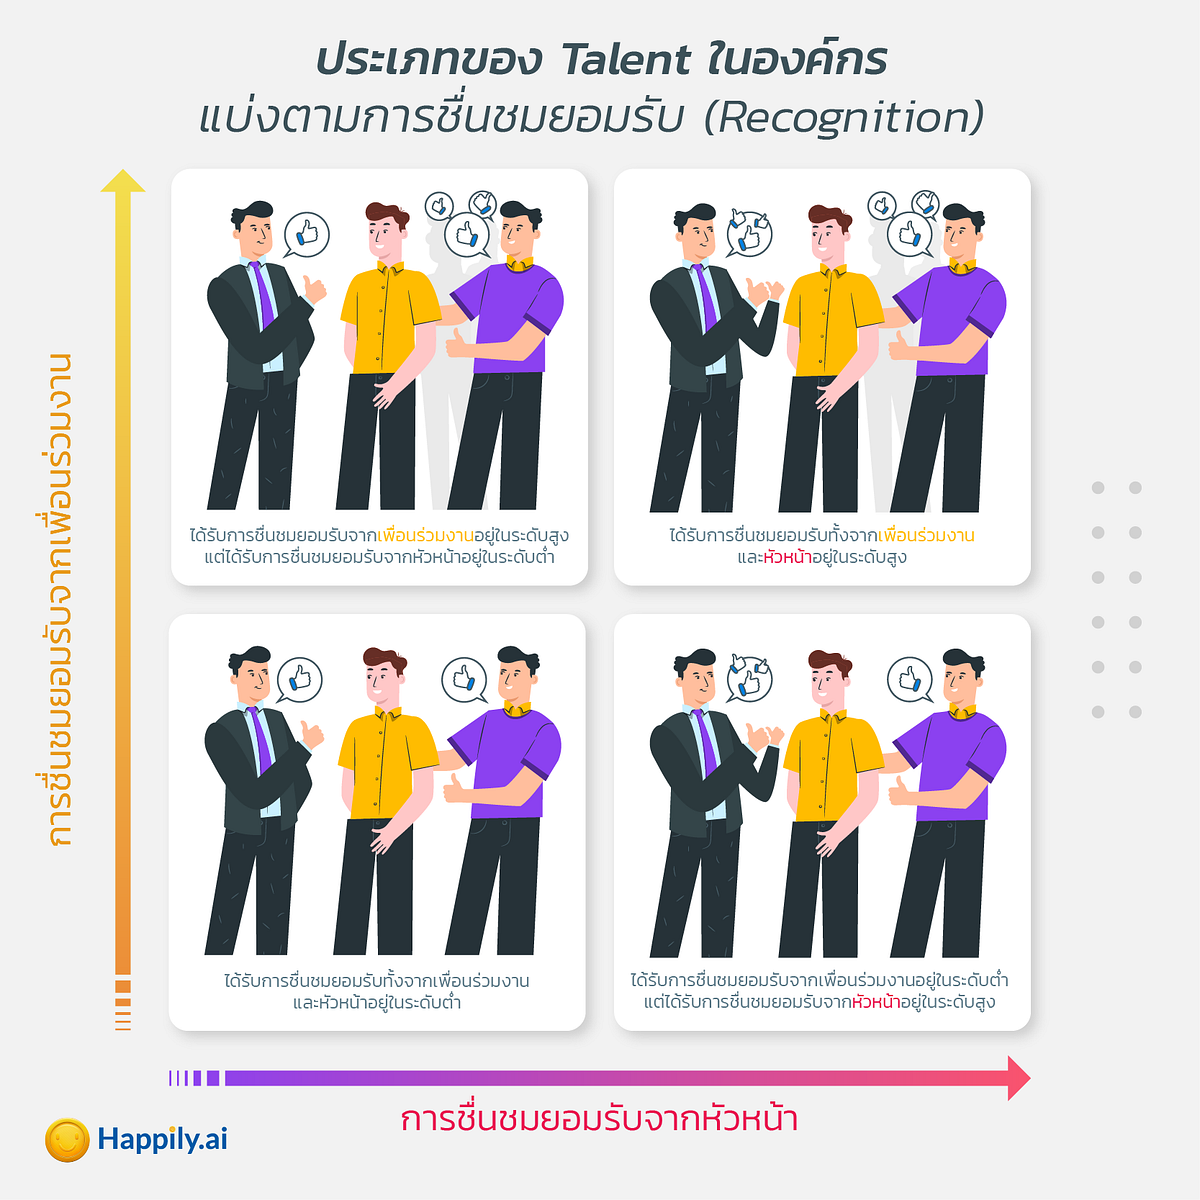 Talent types